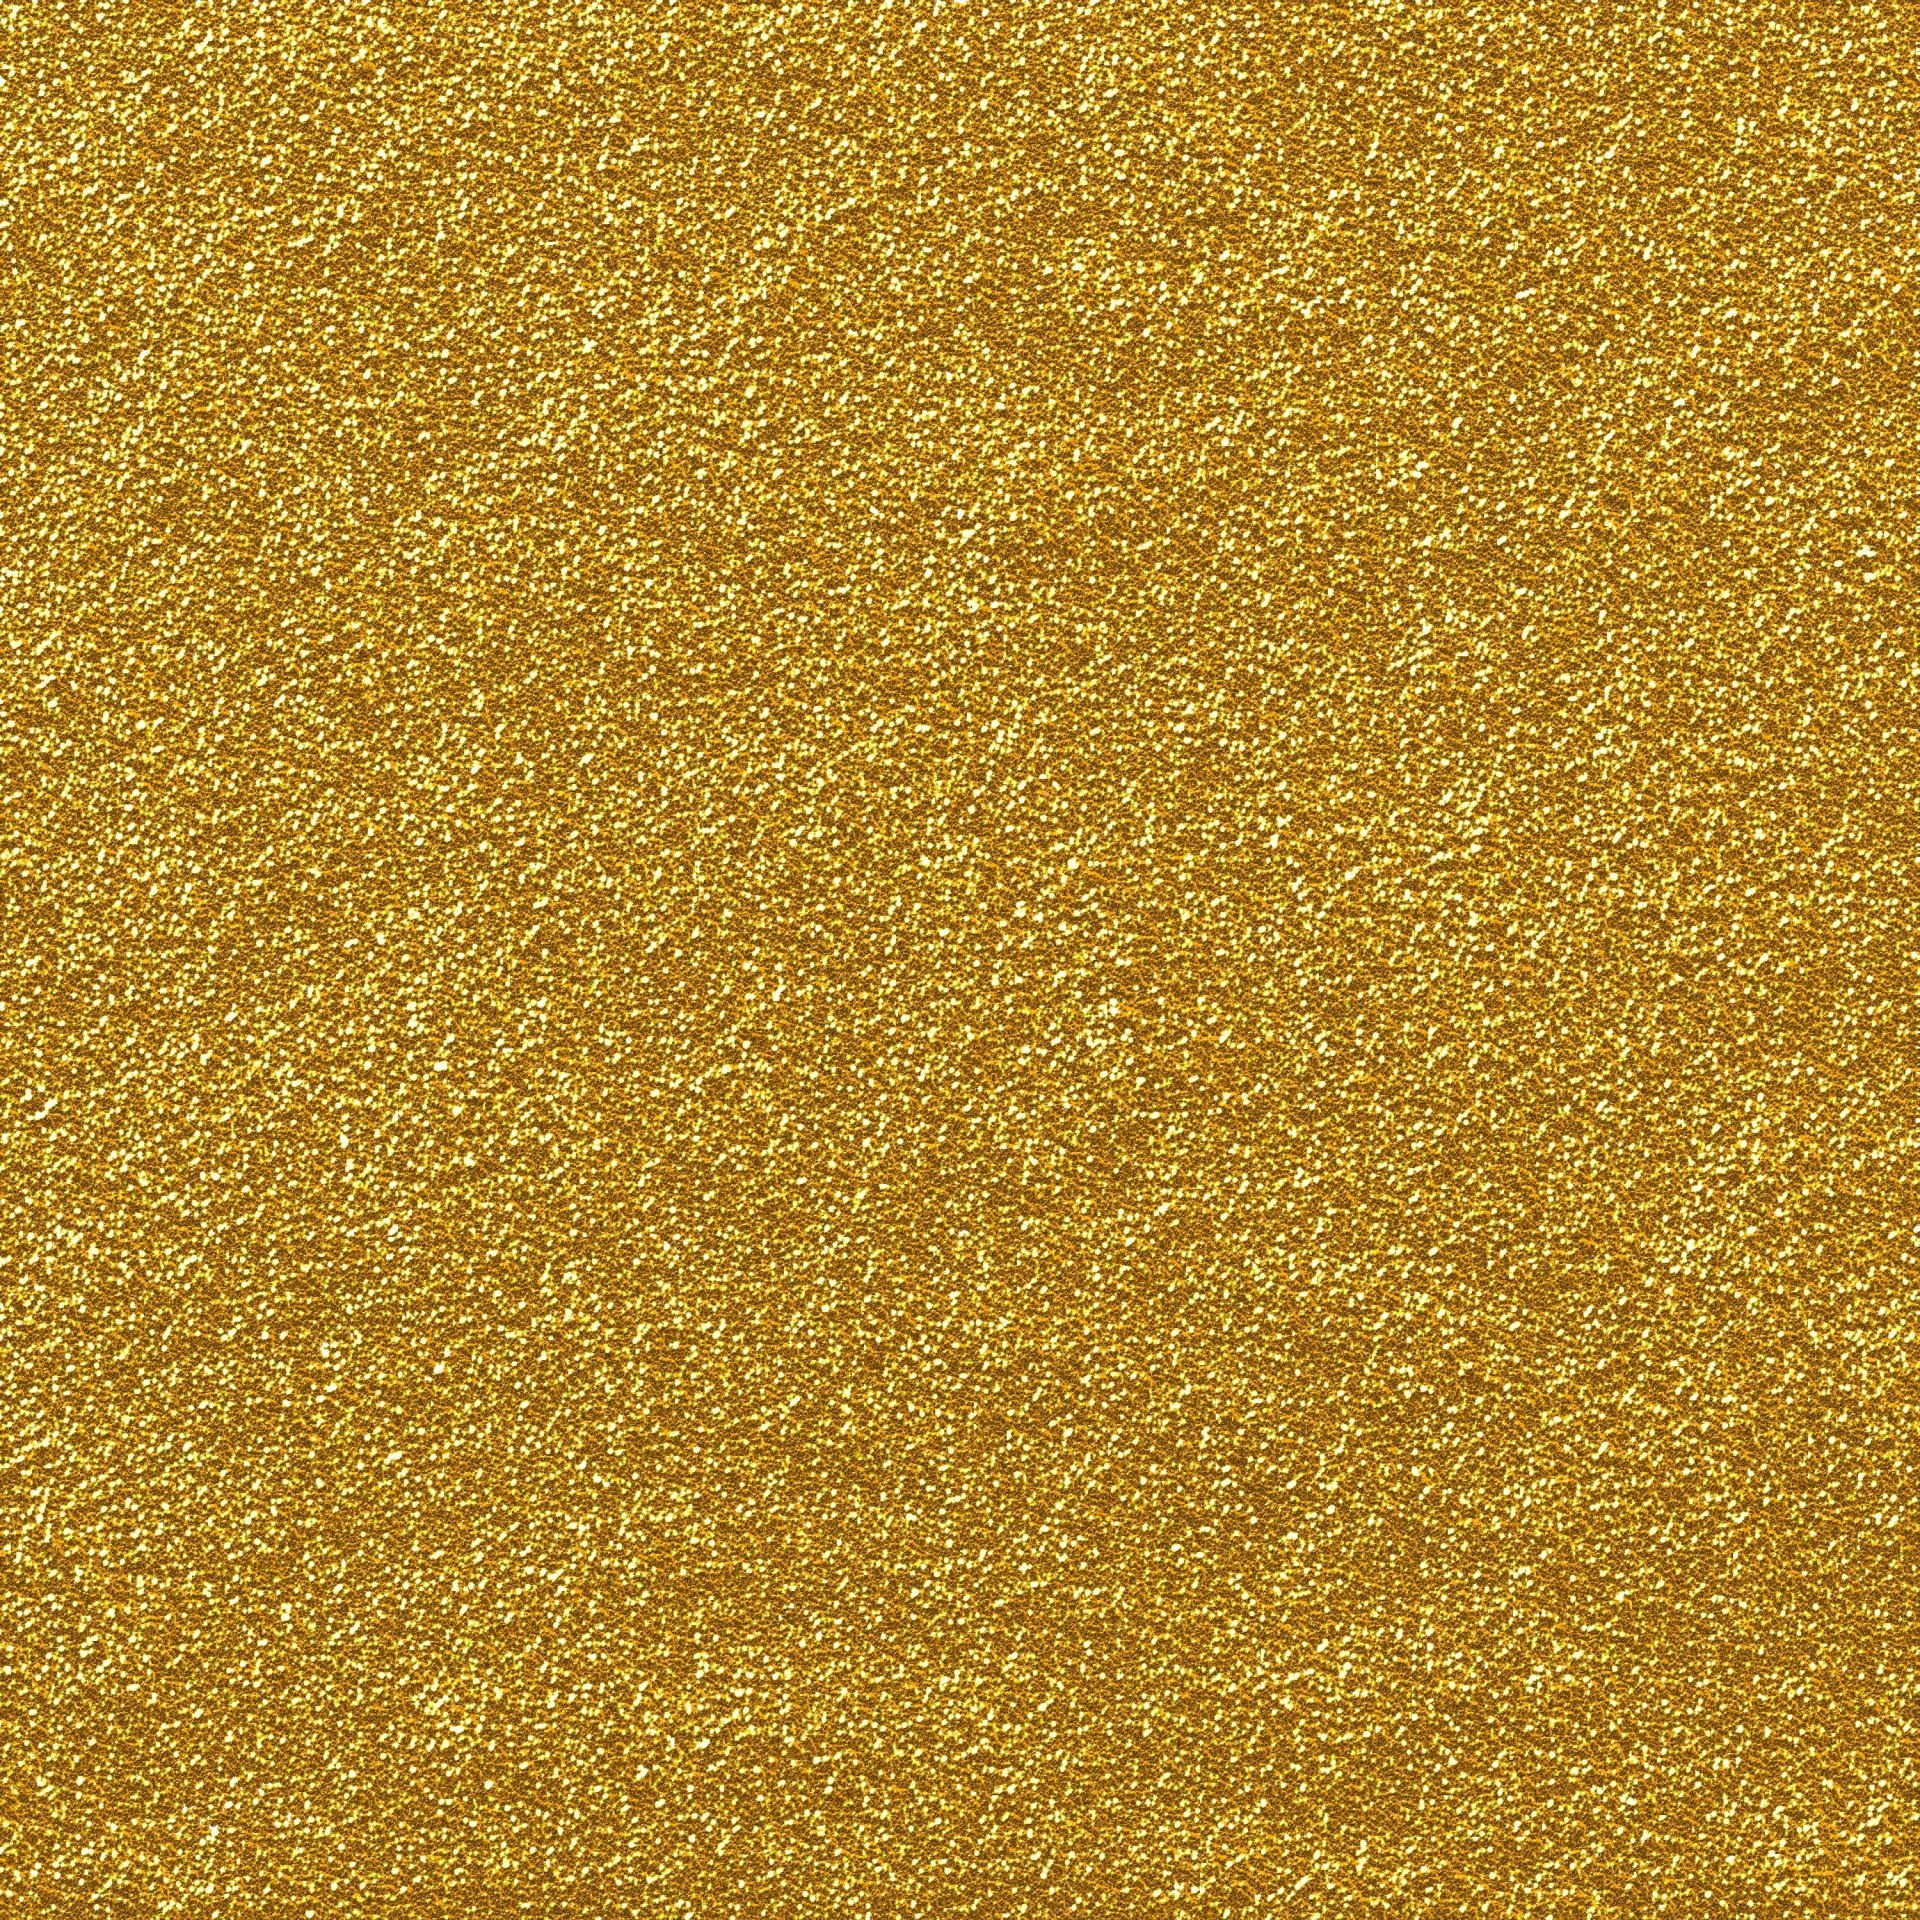 Metallic Gold Glitter Texture Stock Photo HD   Public Domain 1920x1920